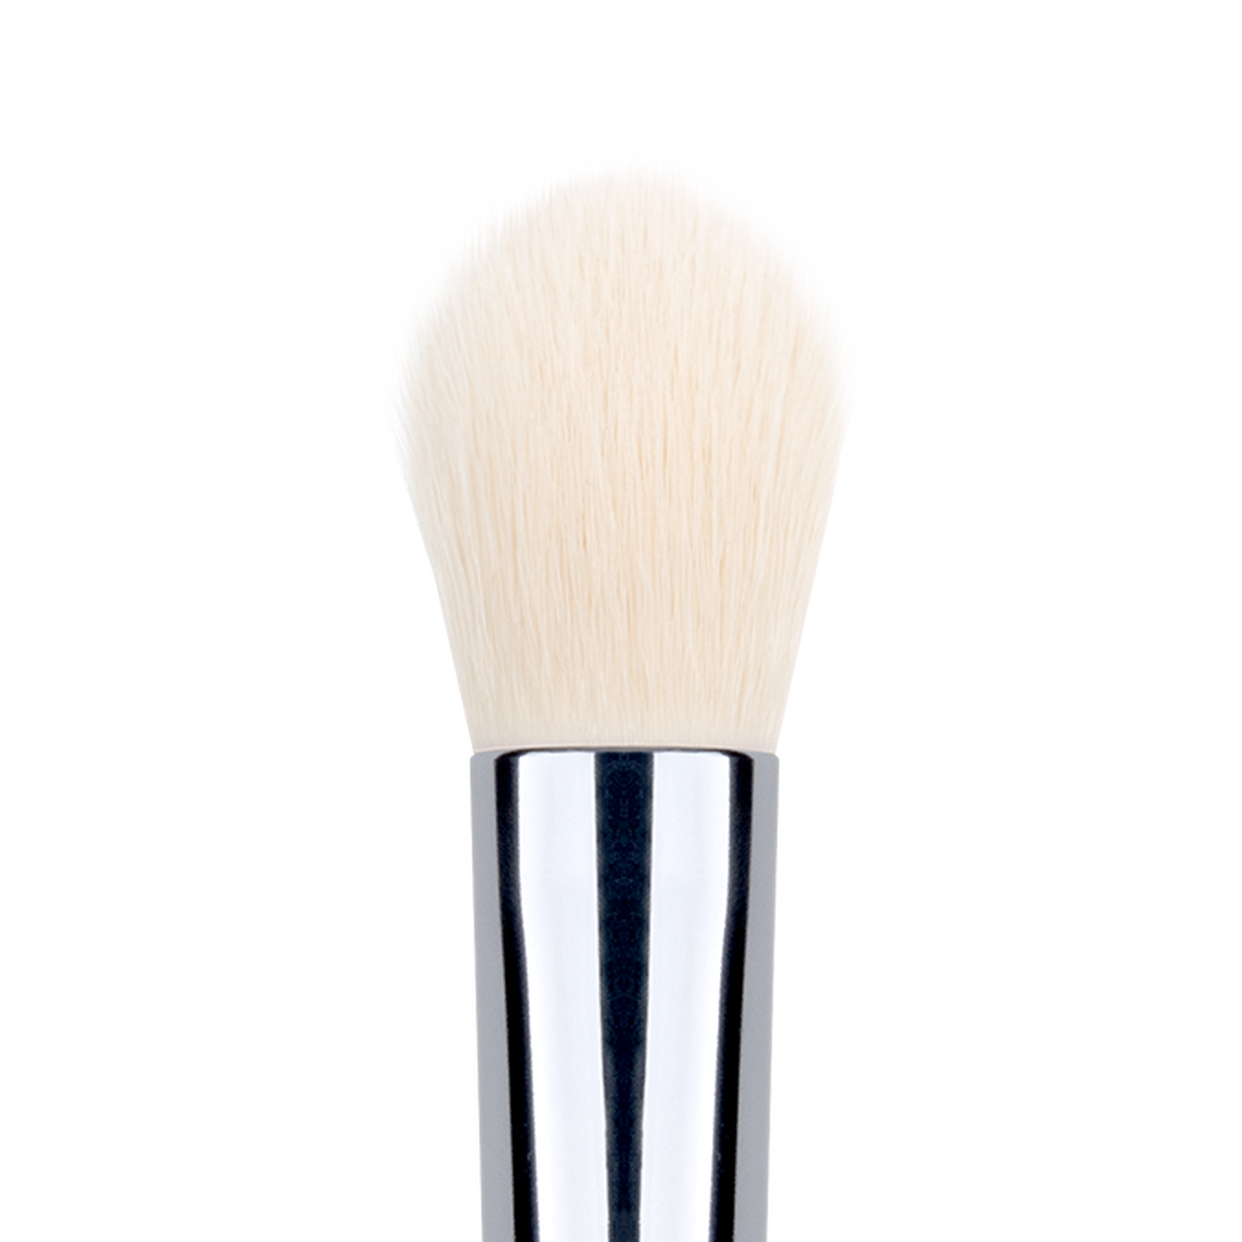 Huda beauty Face Glow Highlighter Brush